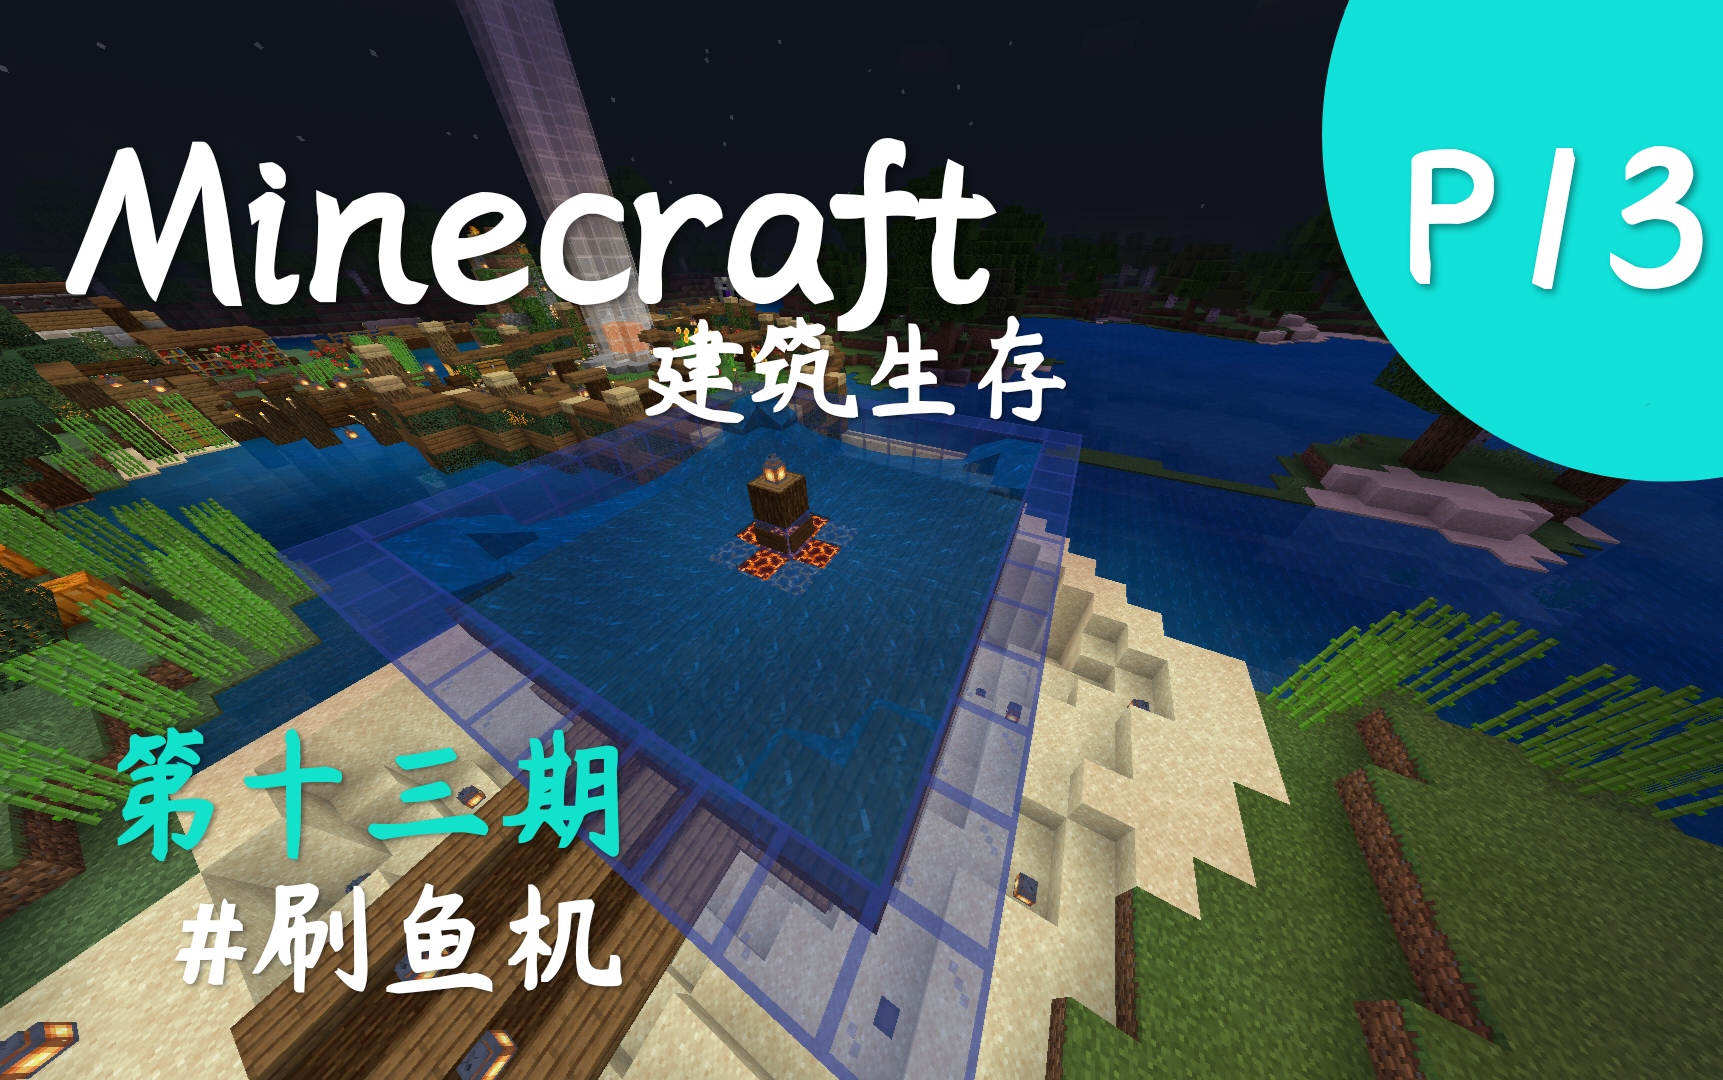 Minecraft 纯净建筑生存p13 刷鱼机 哔哩哔哩 つロ干杯 Bilibili